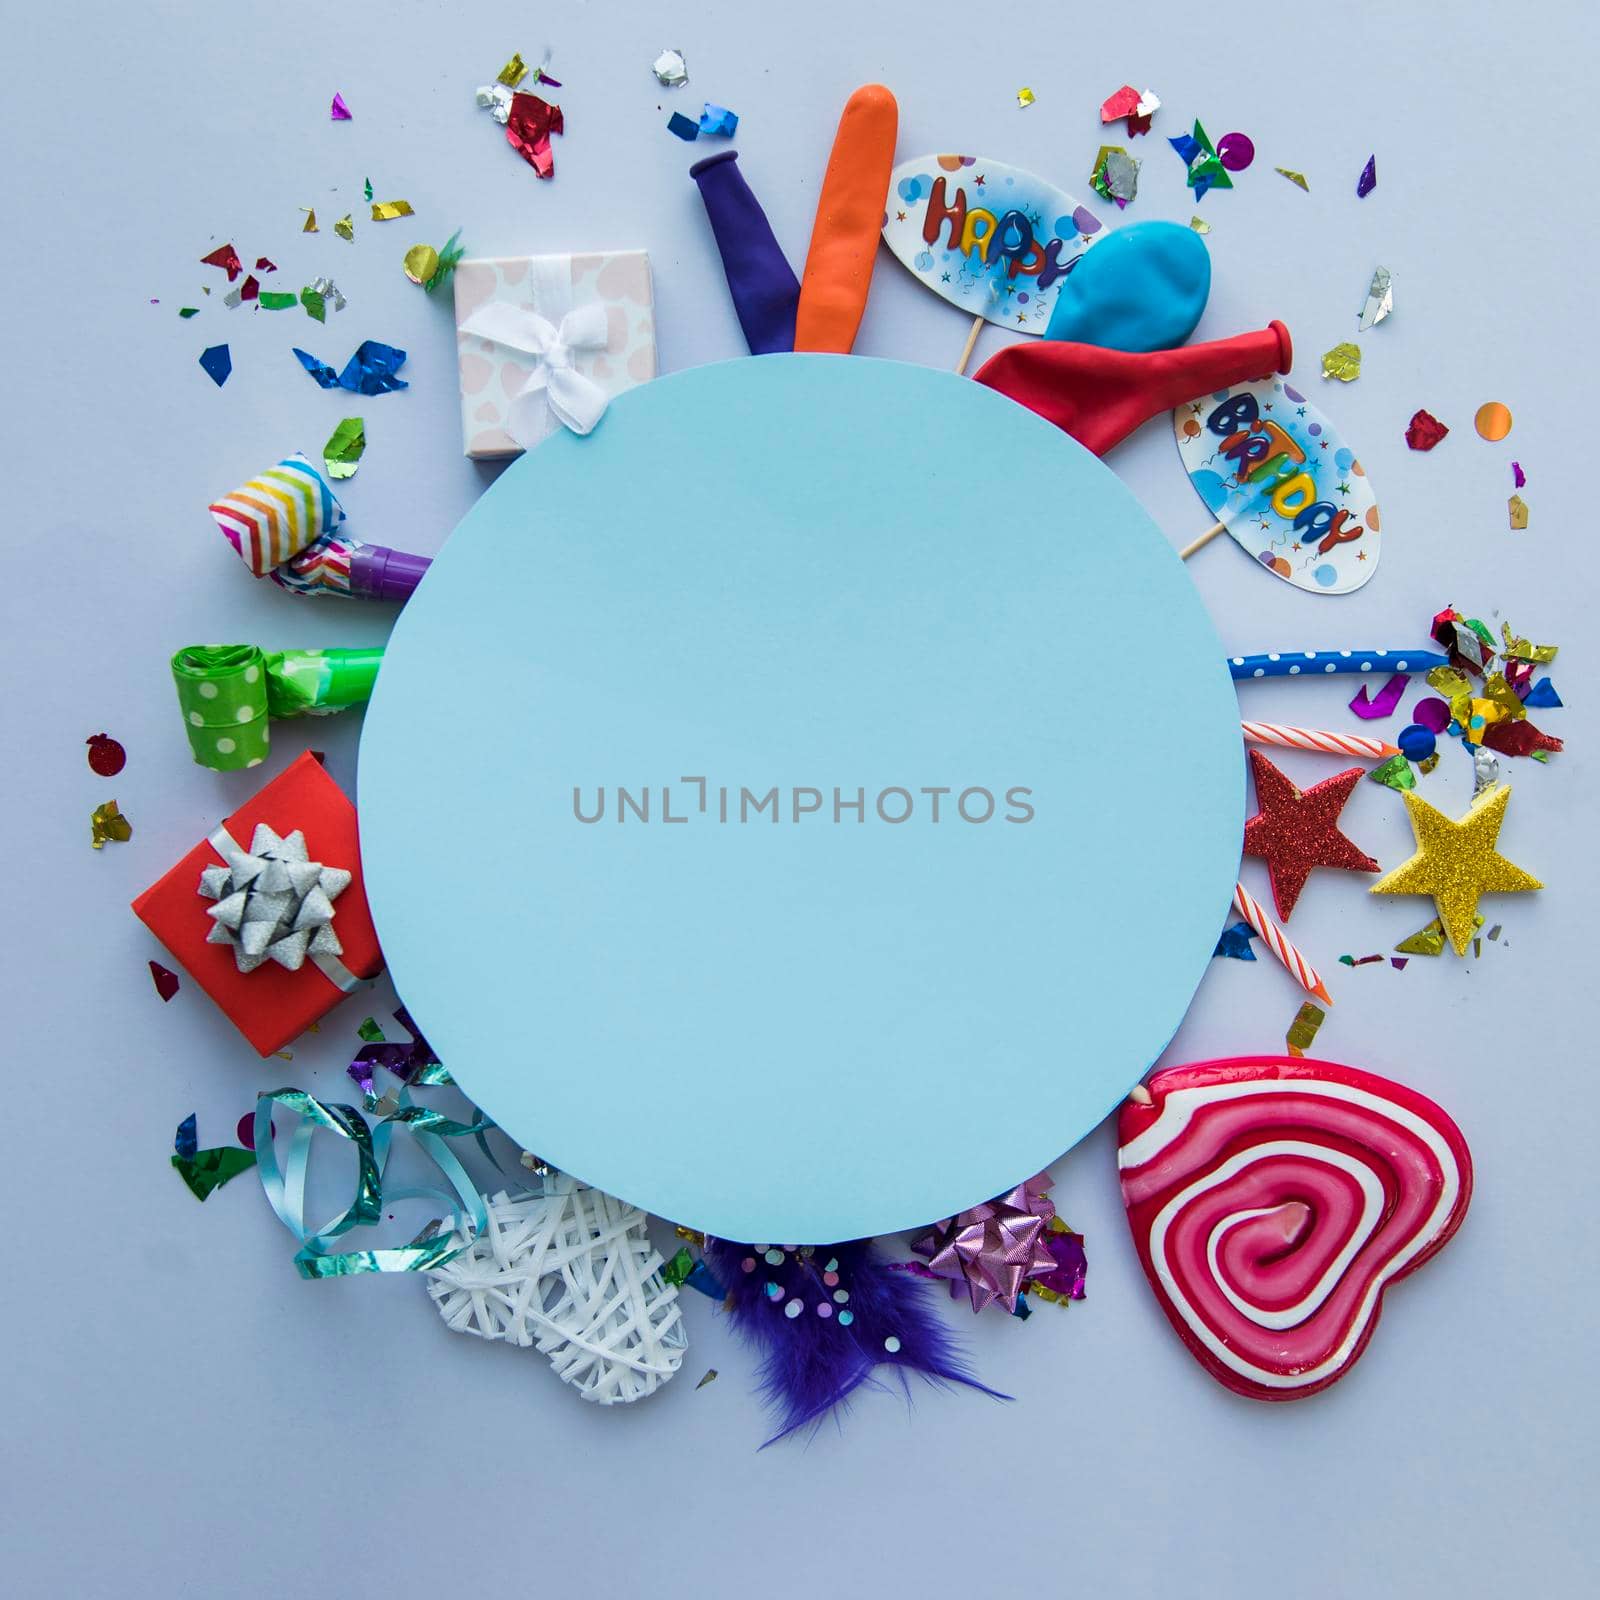 blank blue circular frame birthday party items background. High quality photo by Zahard